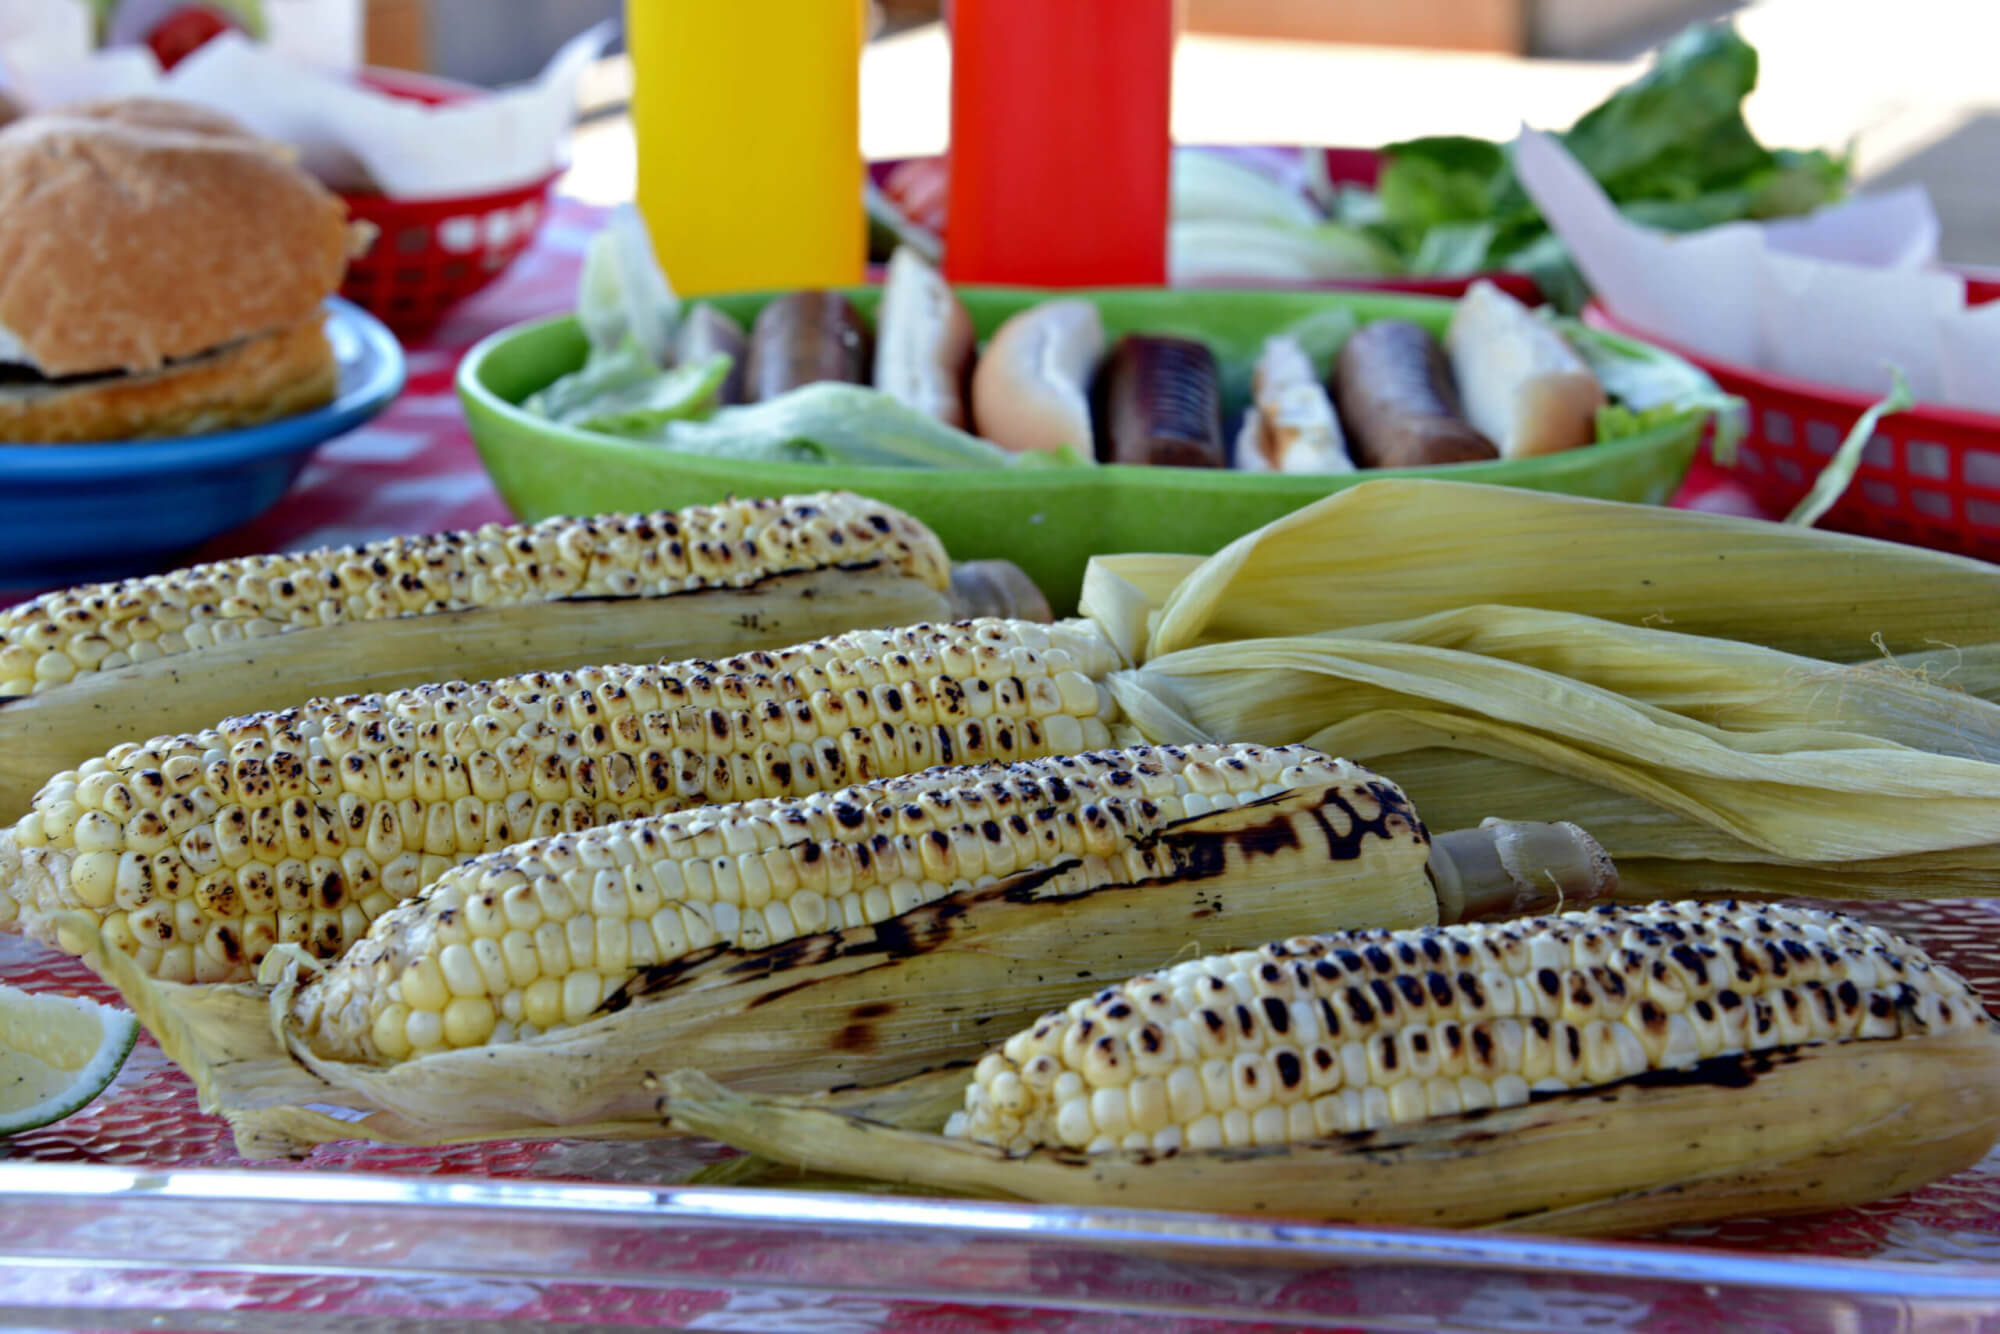 PETA-owned image of corn on the cob